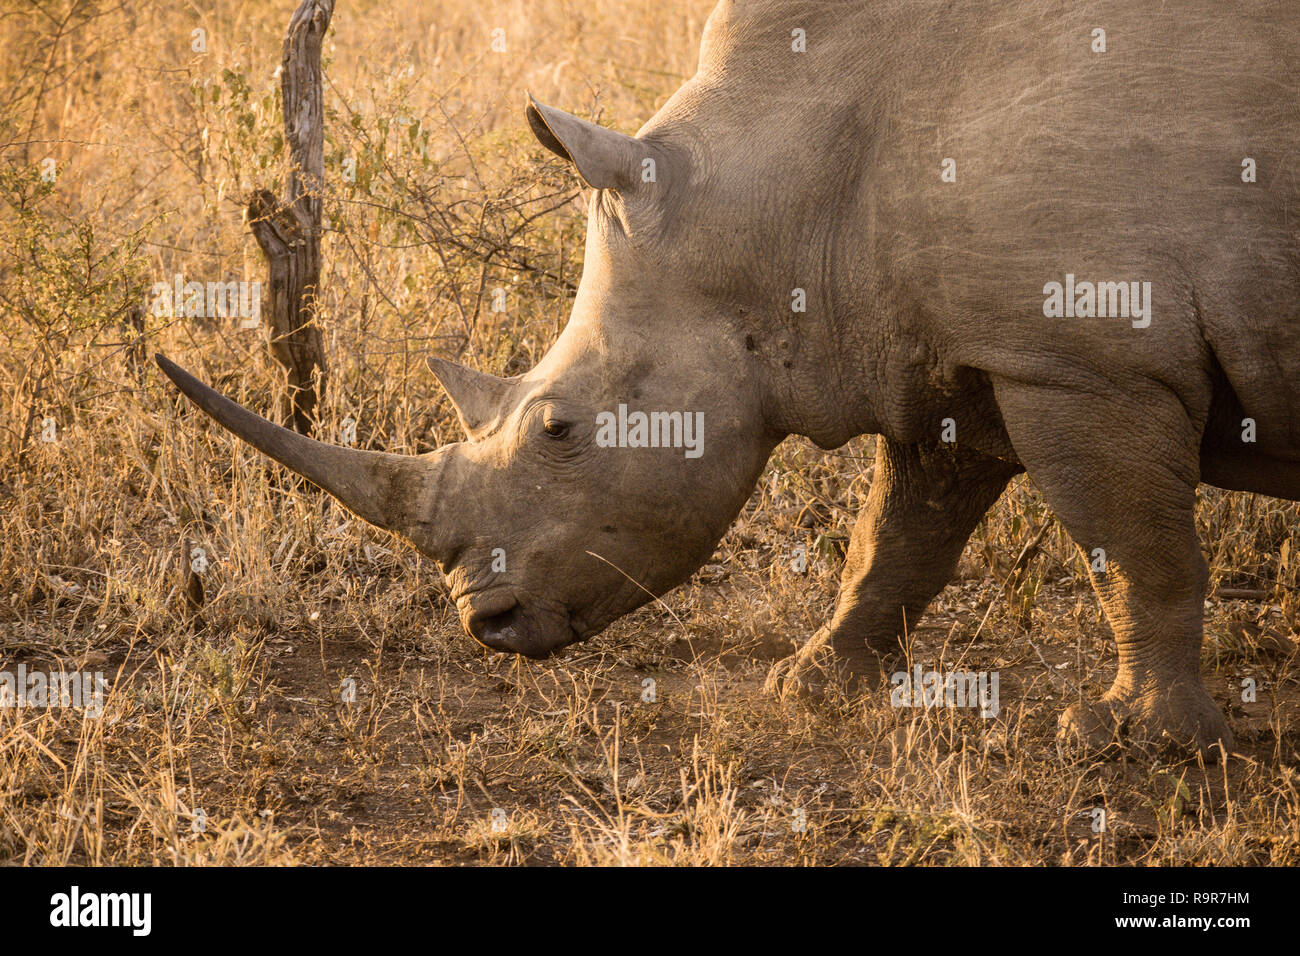 Rhino head in profile in natural African bush land. Stock Photo